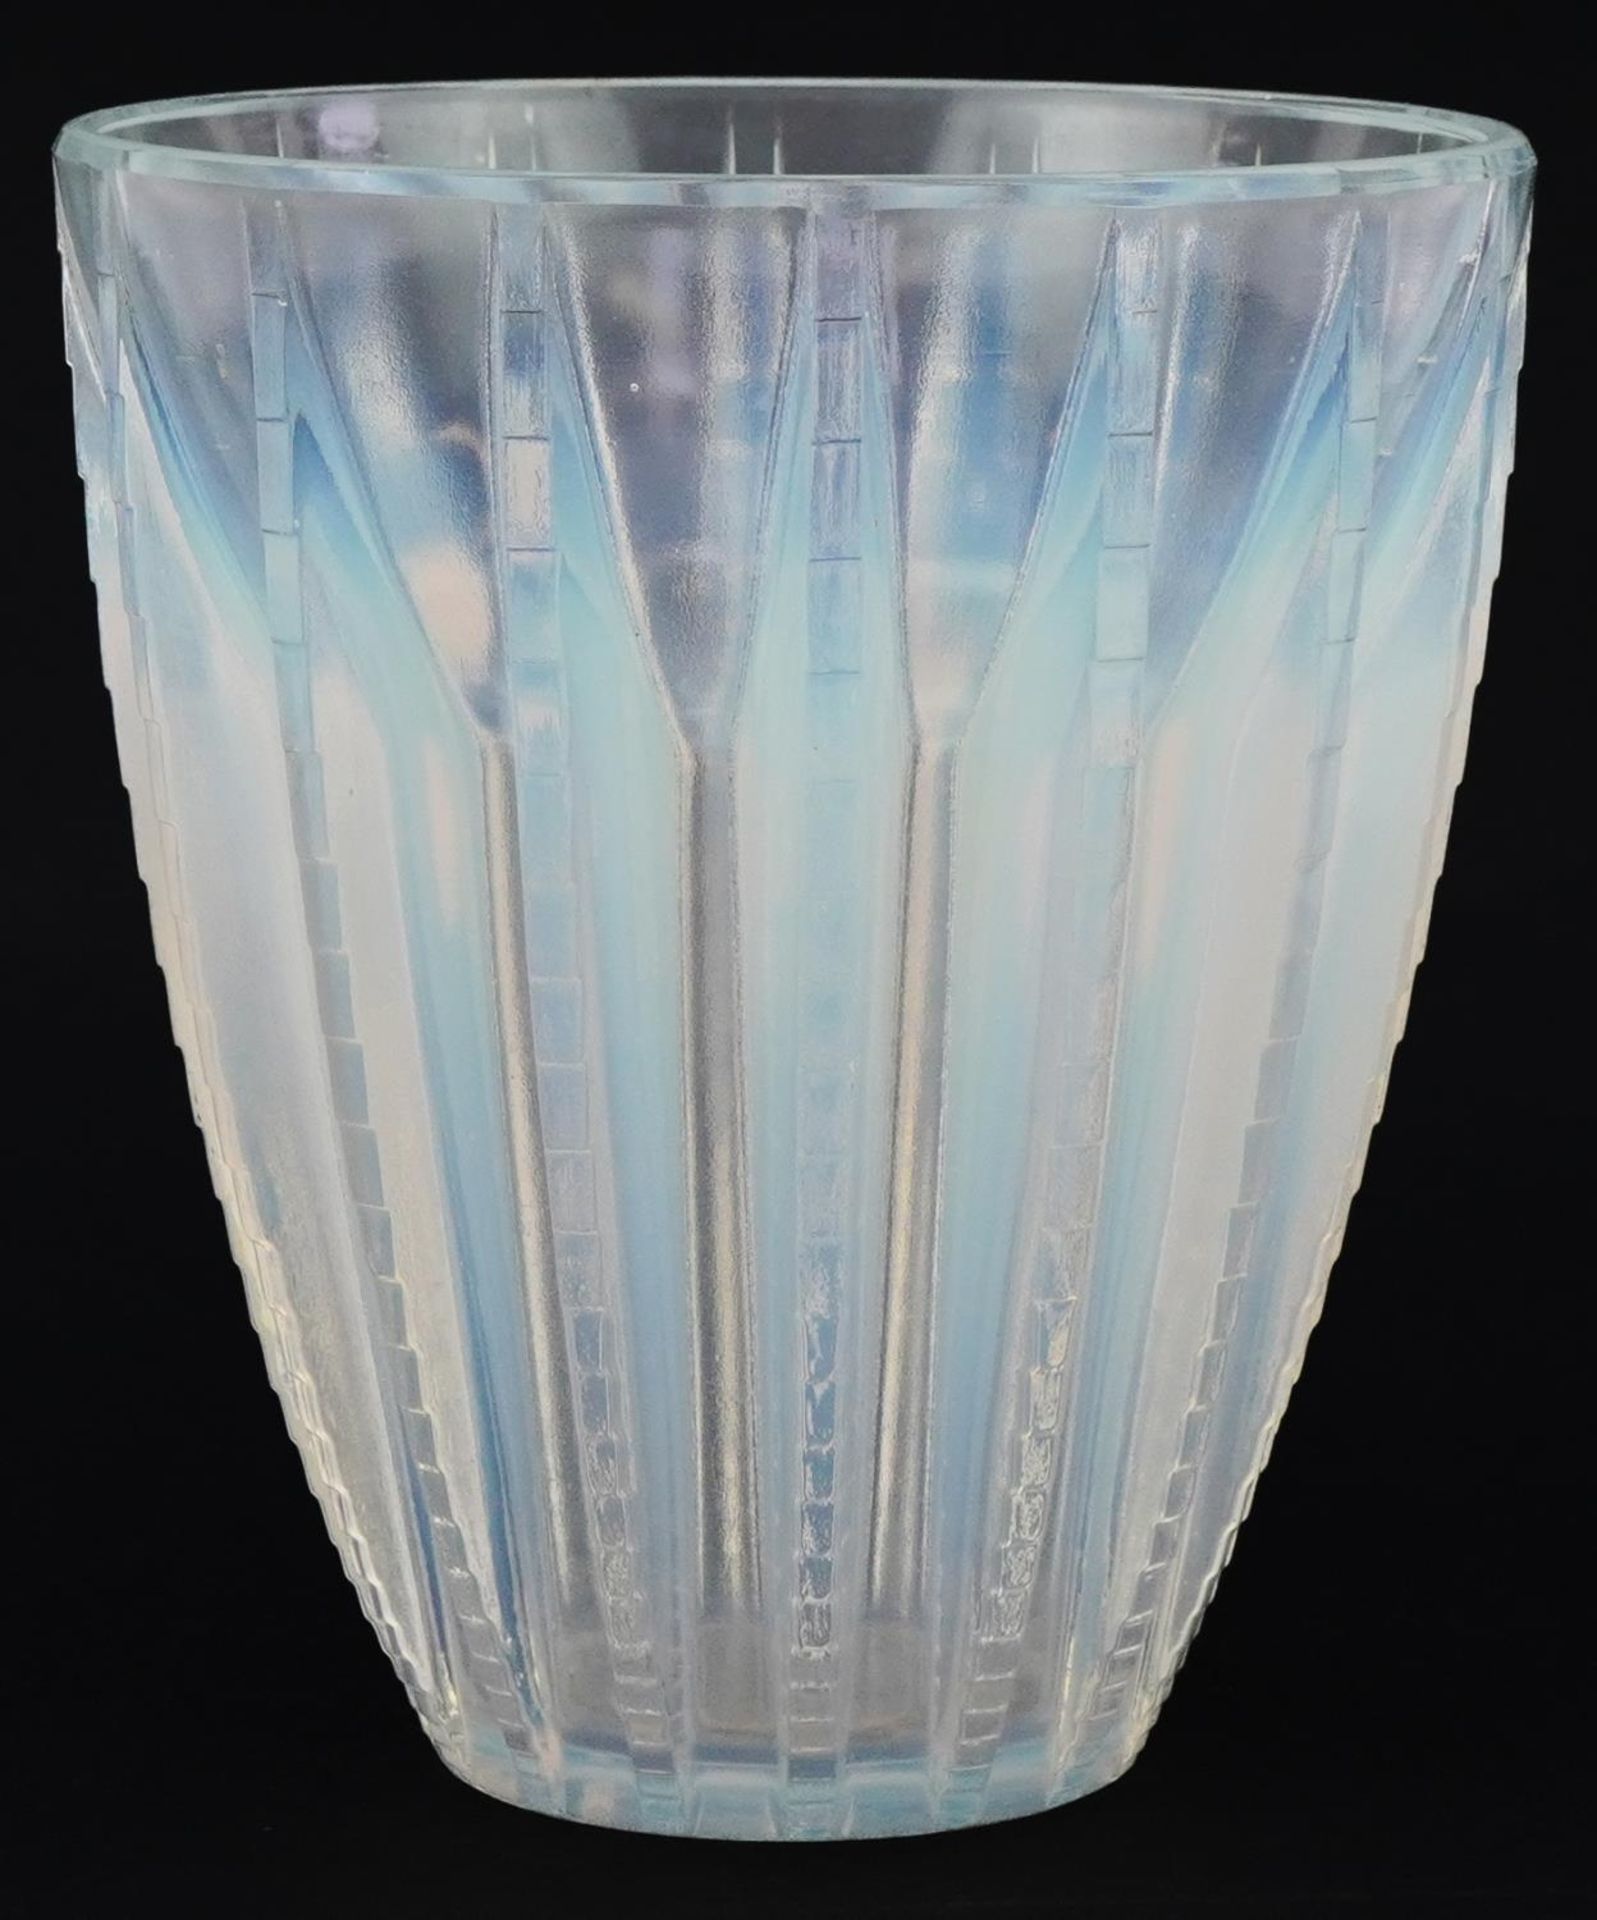 R Lalique opalescent Chamonix vase, etched R Lalique to the base, 15.5 cm high